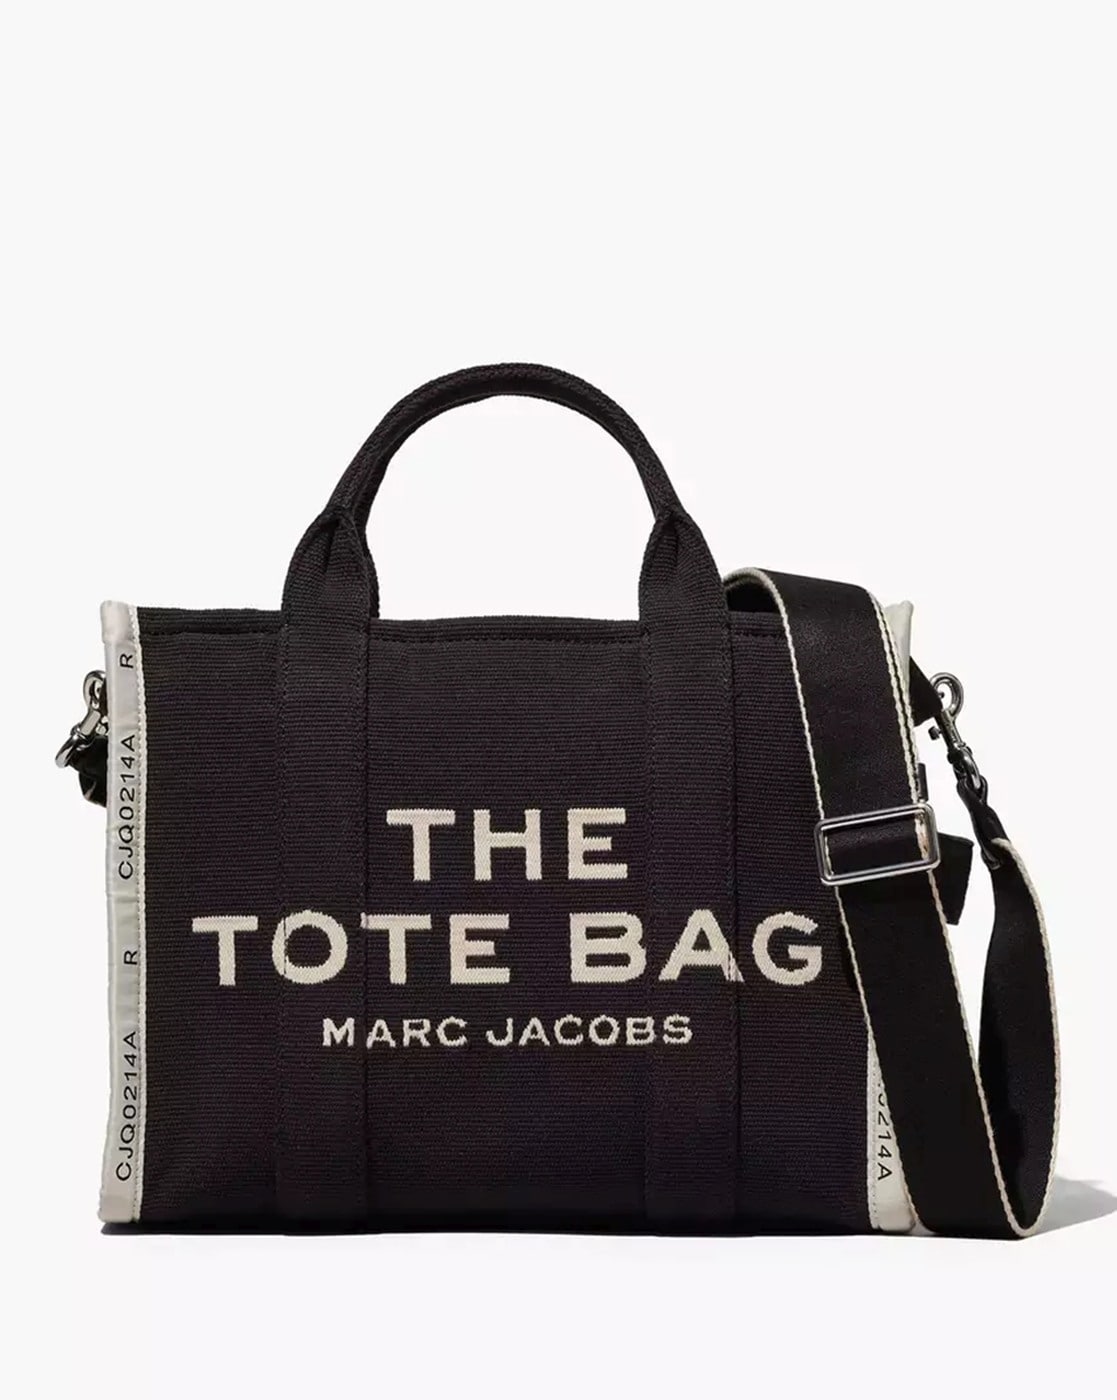 Ajio Haul | Ajio Bags Haul | Purchased Tote Bags from #Ajio| #Tote_Bags -  YouTube